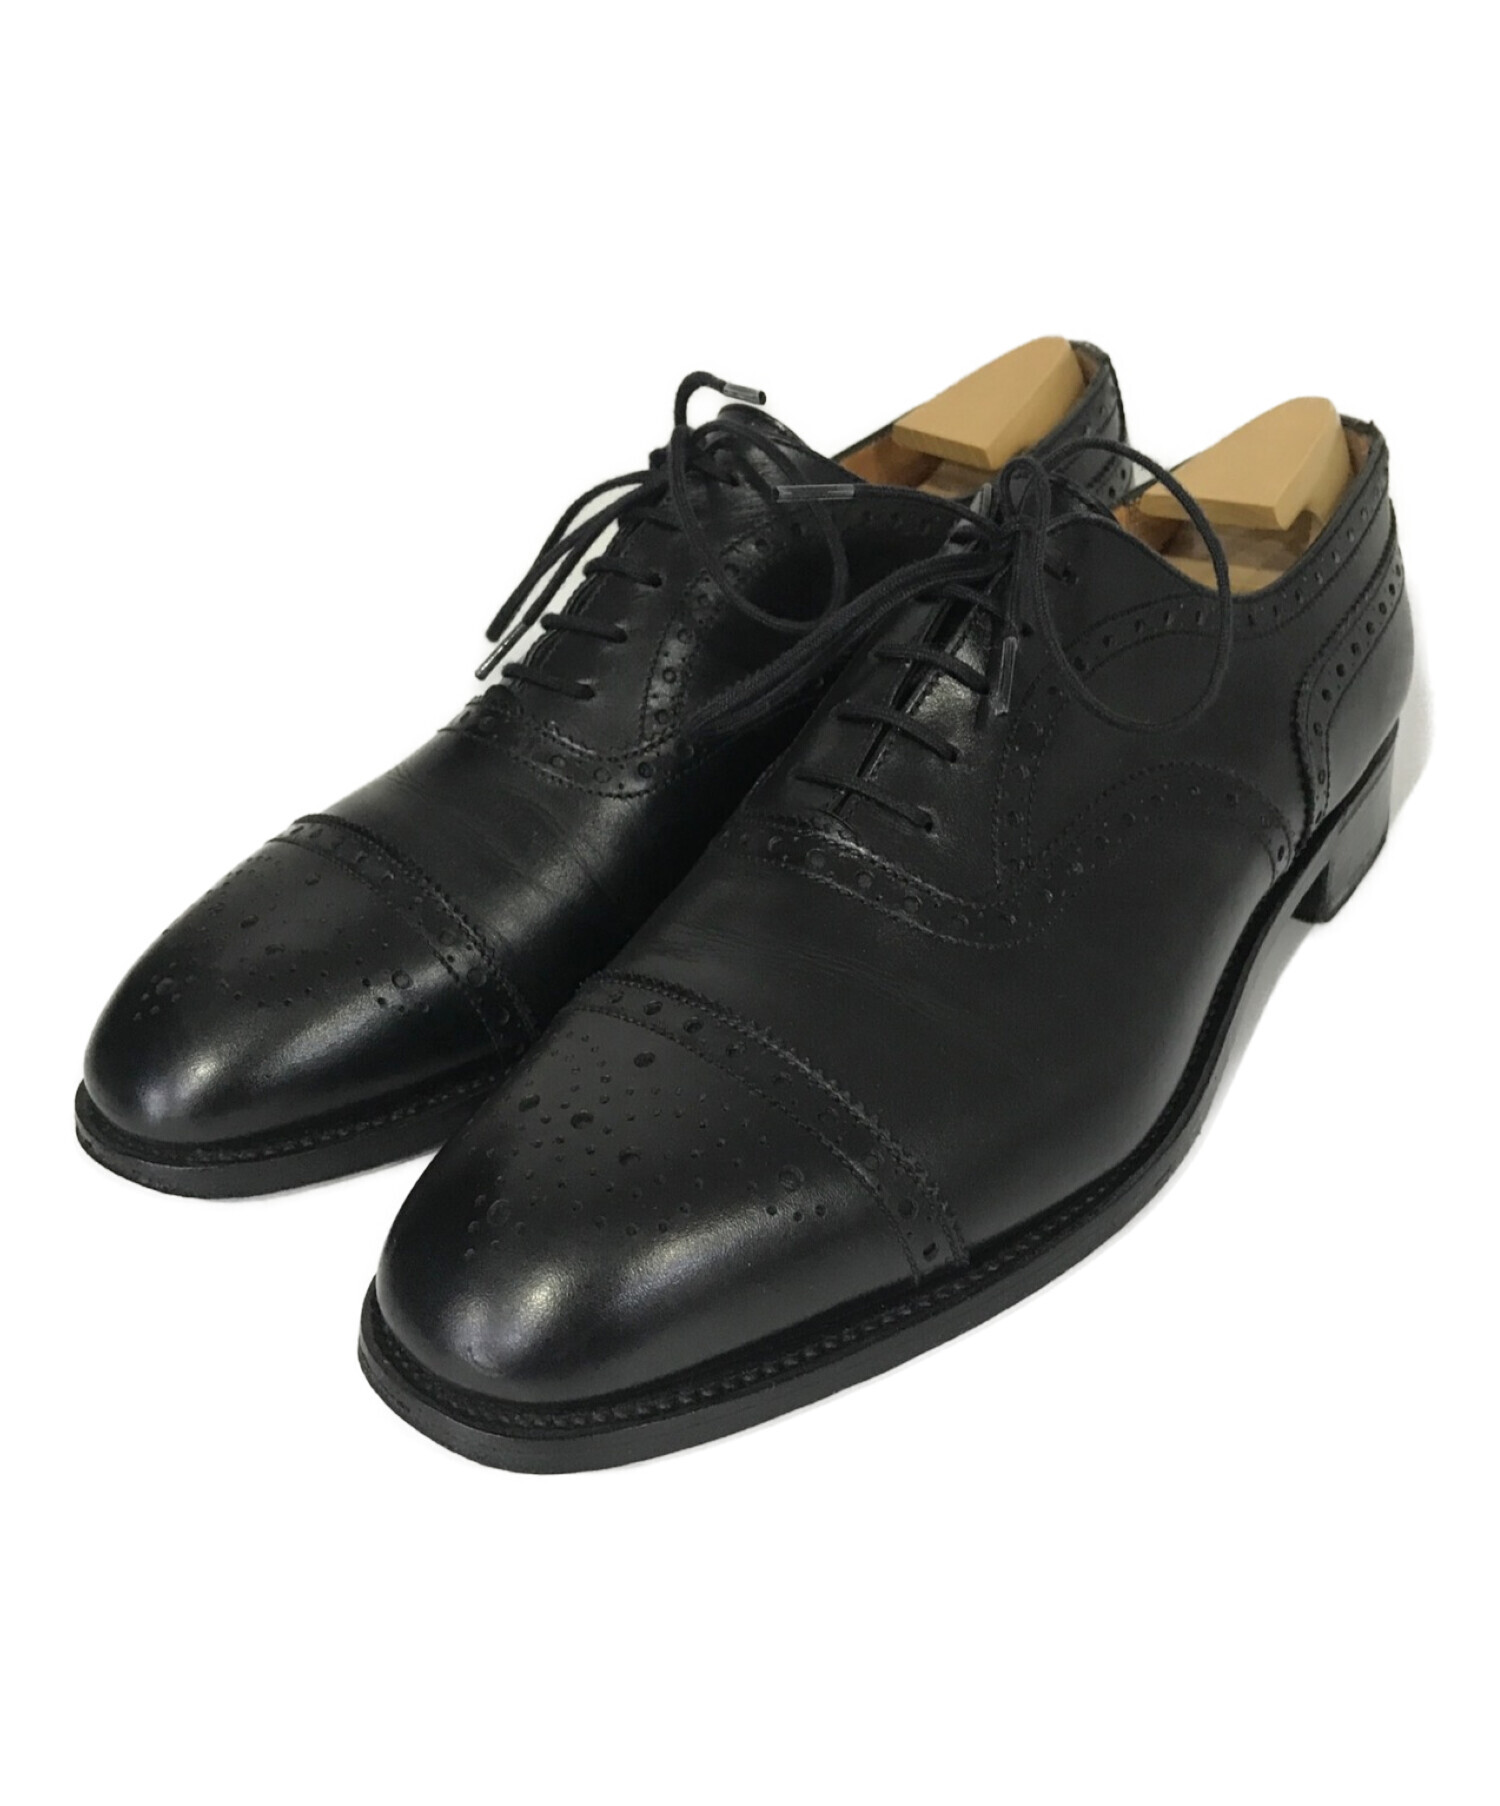 J.M.WESTON【25.0】オックスフォード ウィングチップ 革靴 本革 黒